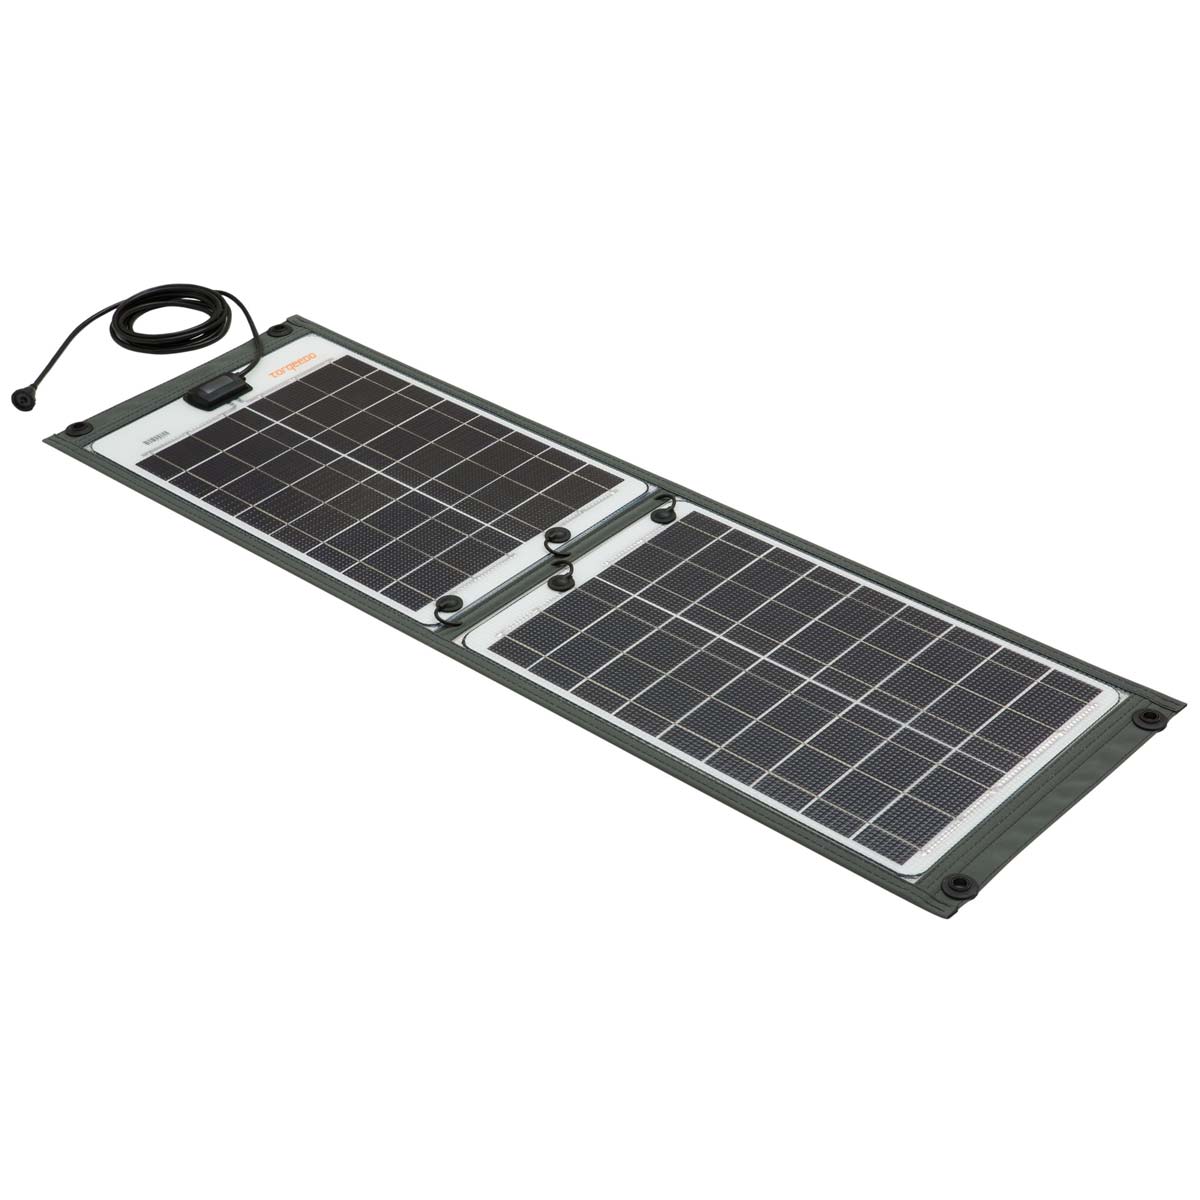 Sunfold solar charger 60 W for Travel/Ultralight